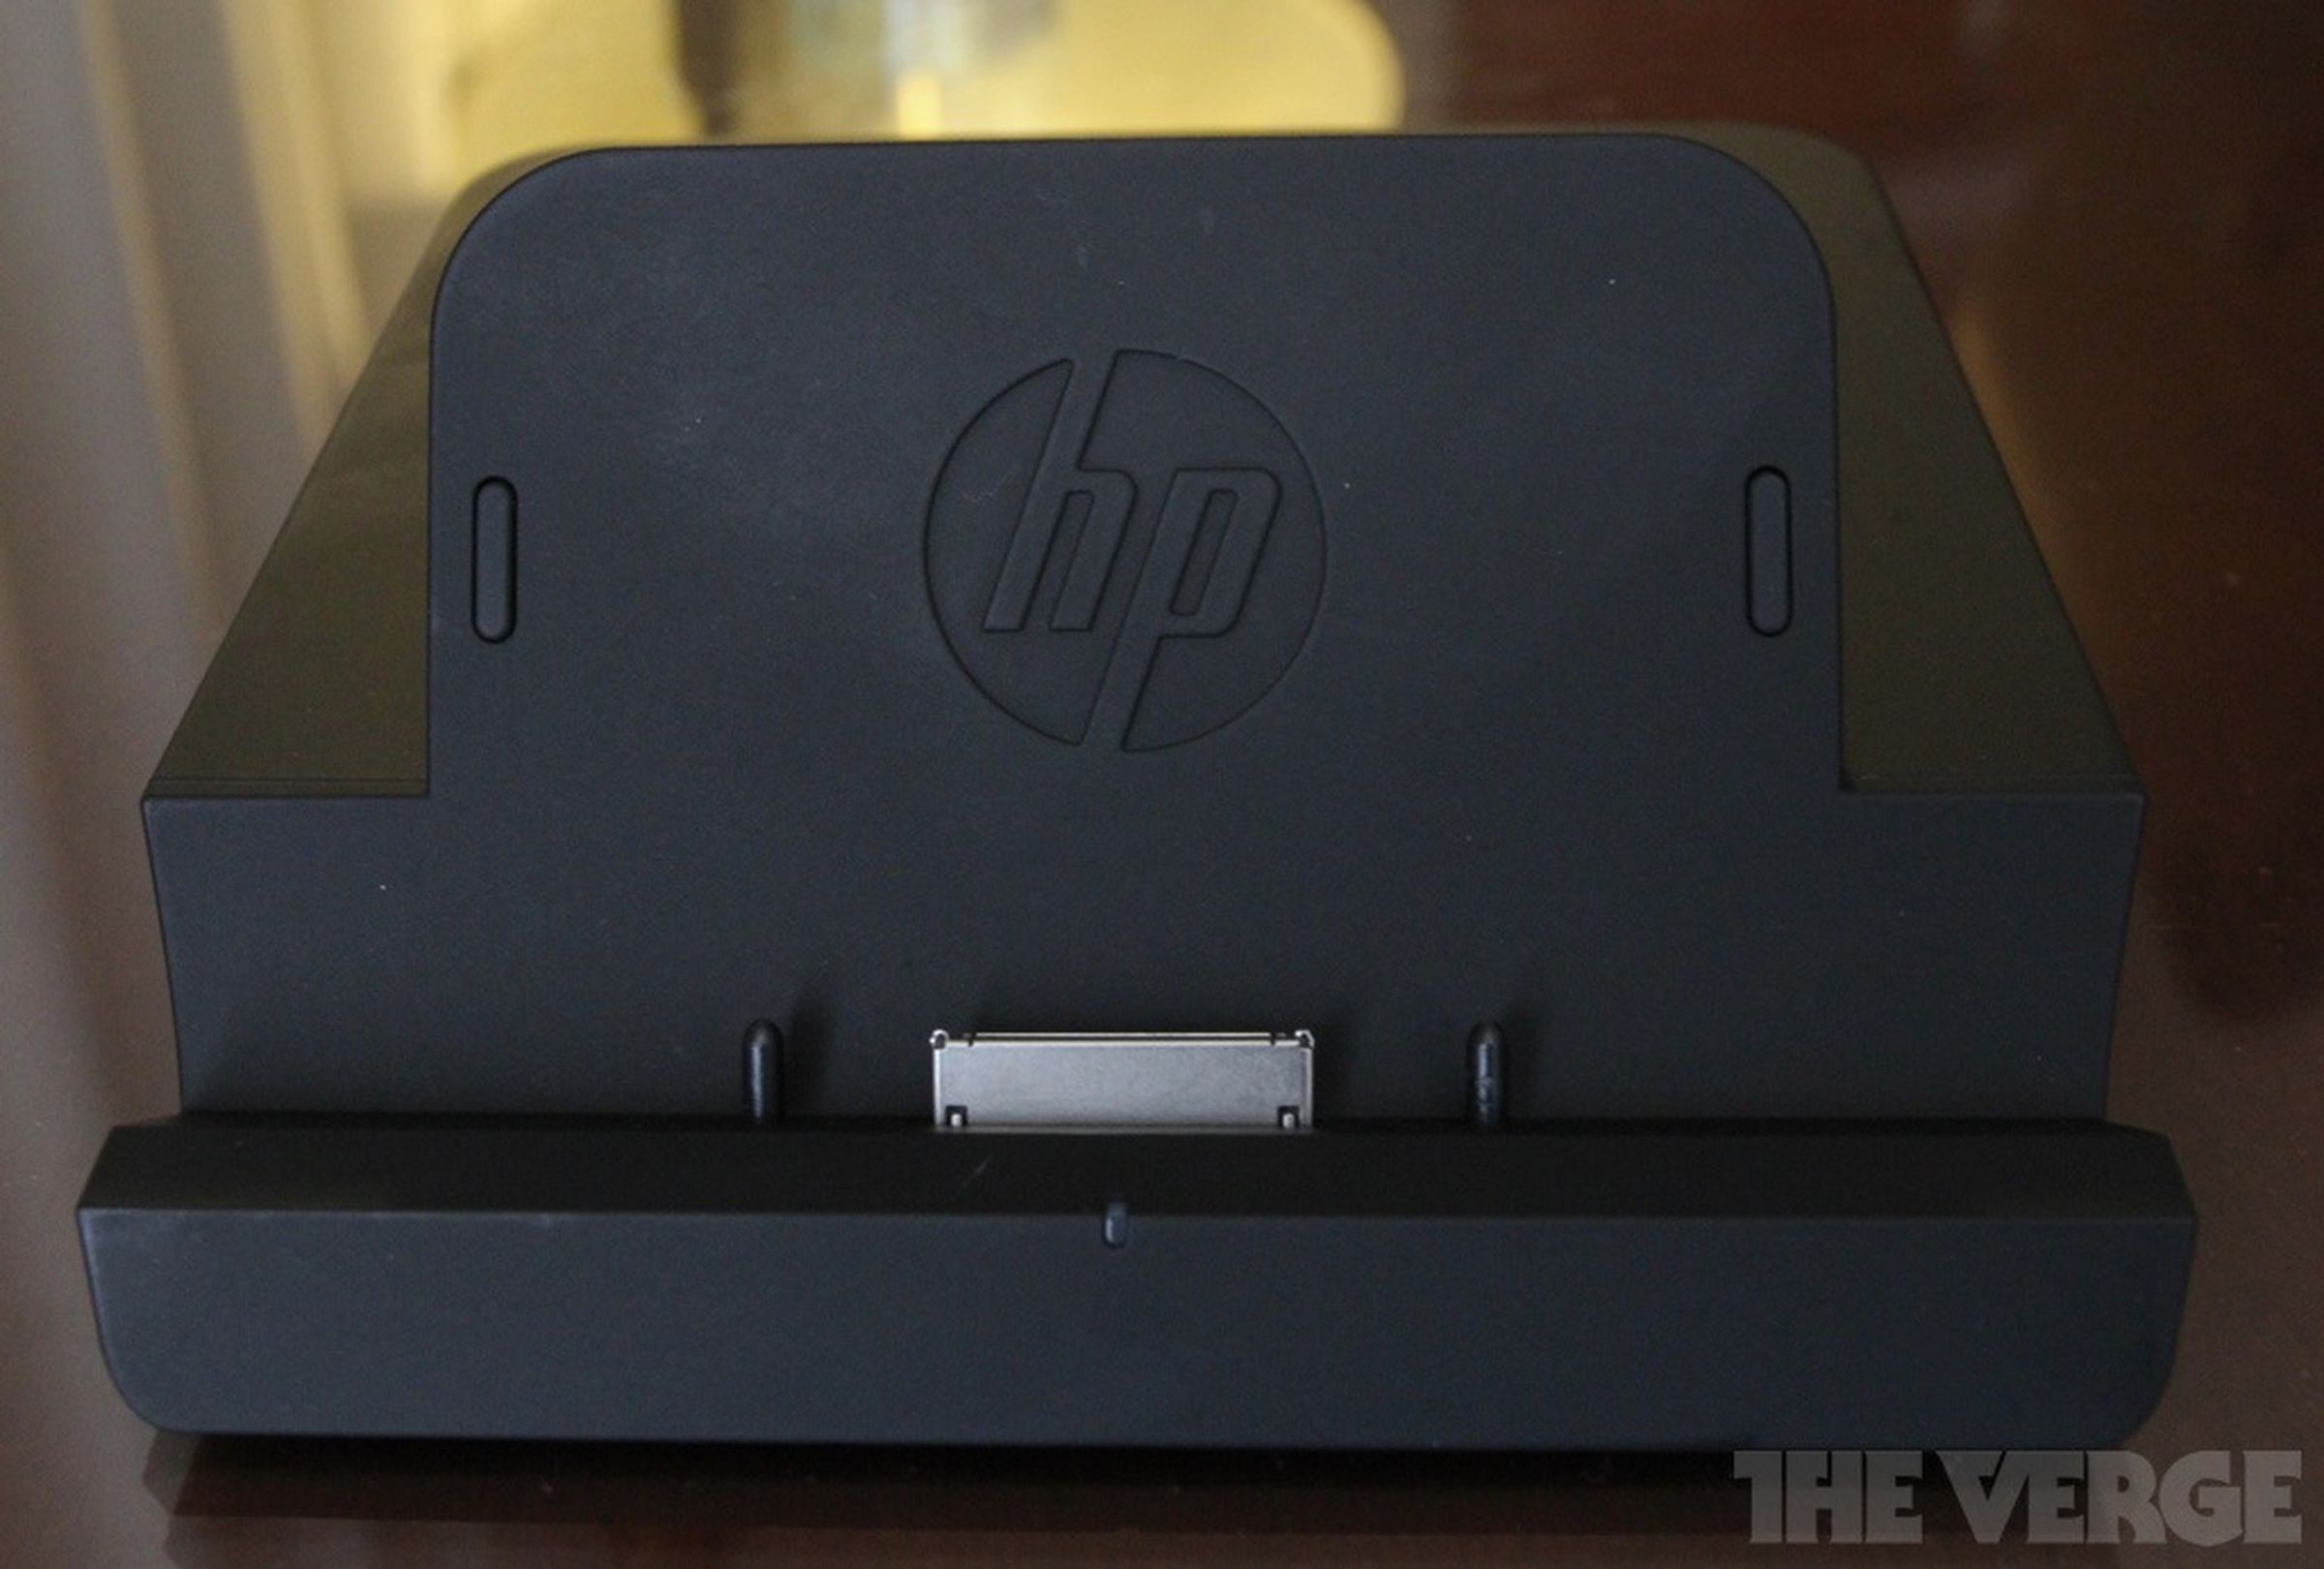 HP ElitePad 900 hands-on photos